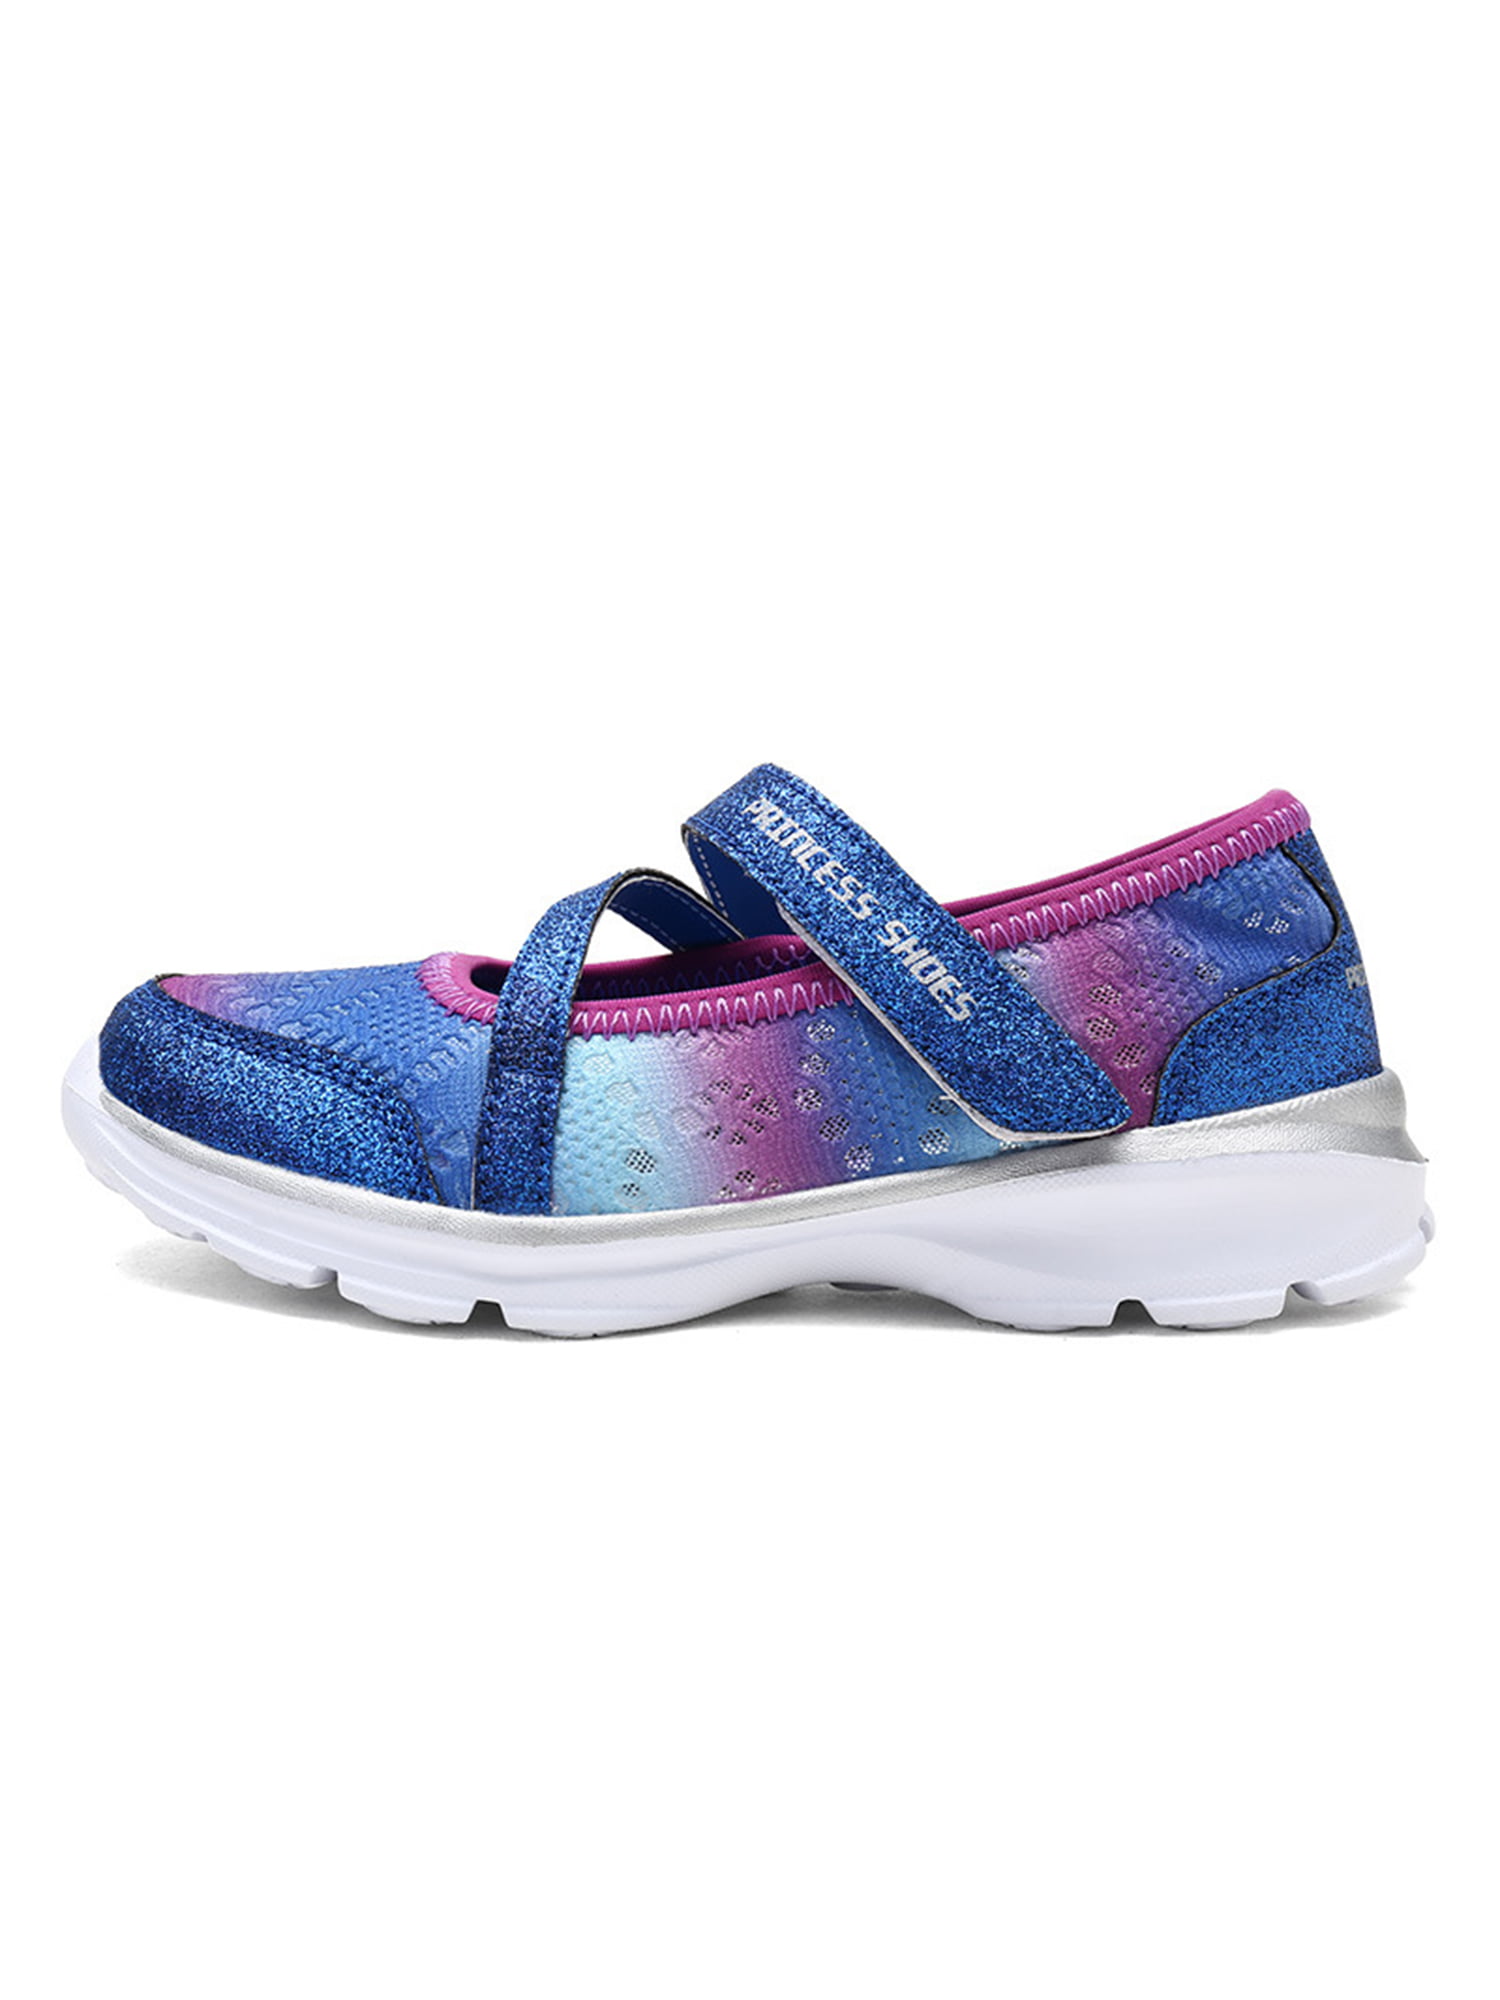 Girls Peppa Pig Mermaid Aquasocks Beach Sandals Clogs Shoes Mules Kids Size 5-10 